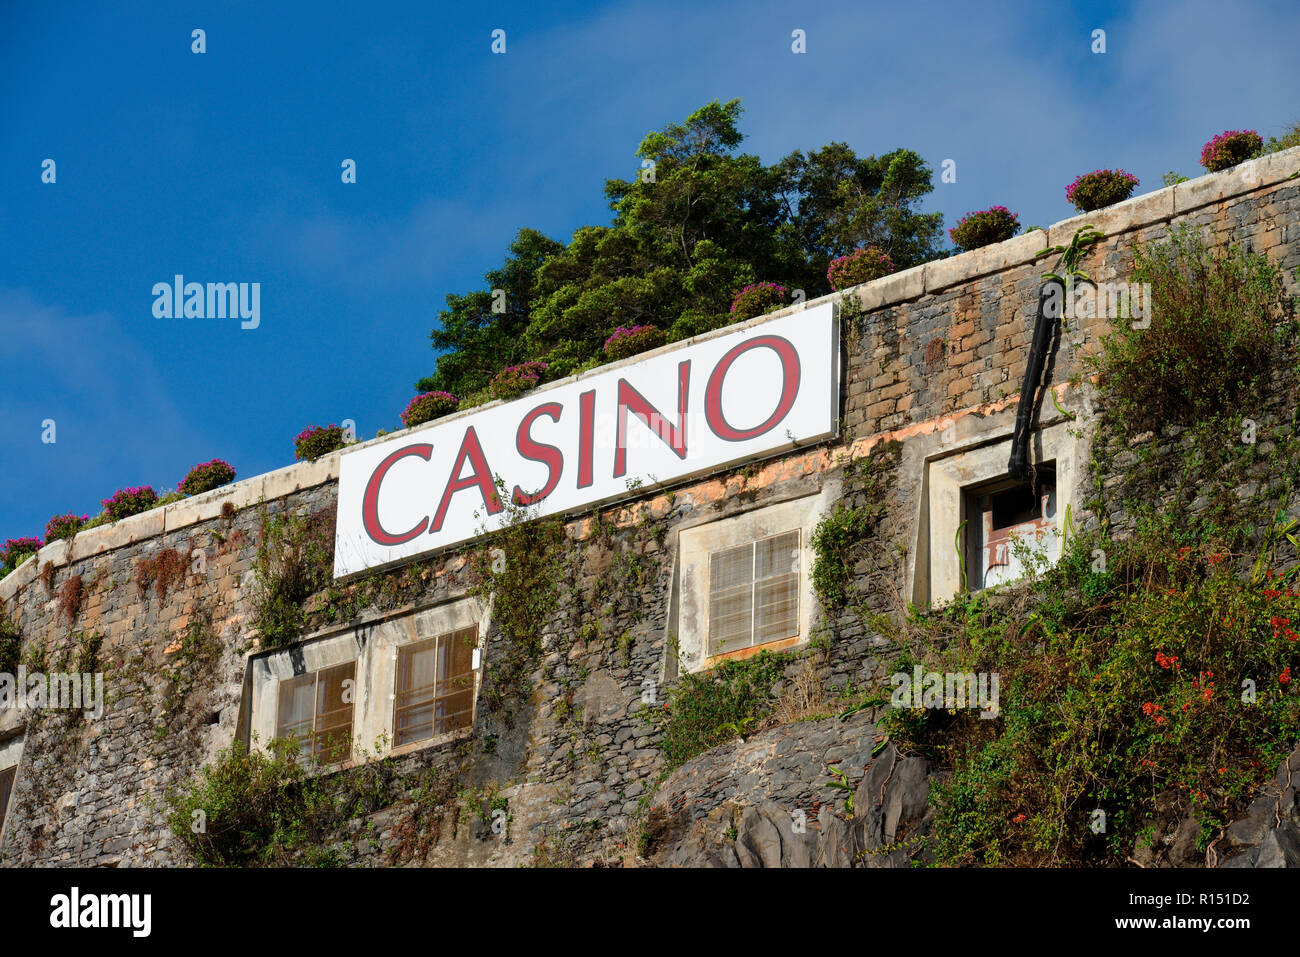 Casino da Madeira, Av. Do Infante, Funchal, Madeira, Portugal Stockfoto